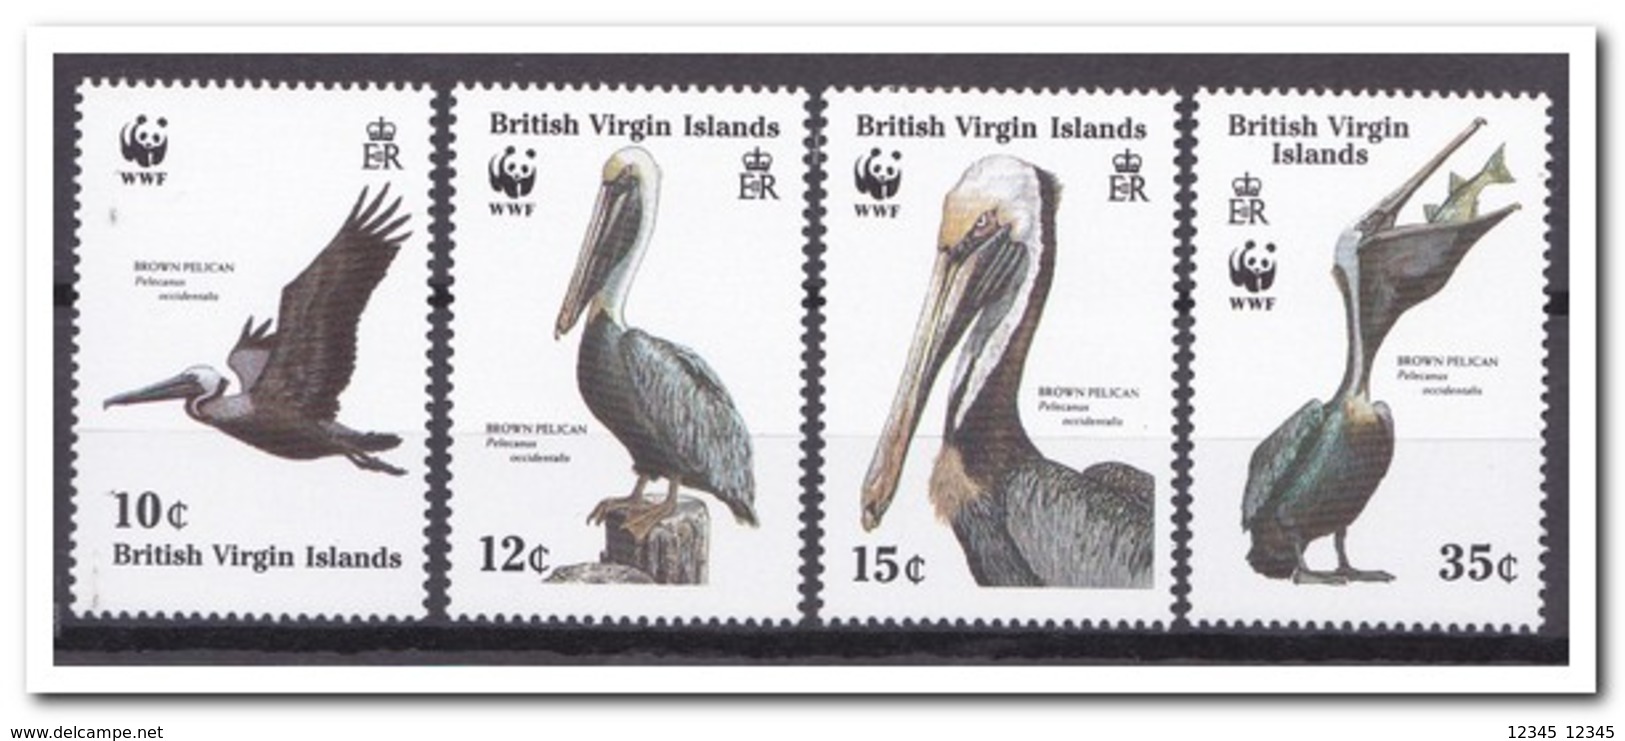 Britse Maagdeneilanden 1988, Postfris MNH, Birds, WWF - Britse Maagdeneilanden